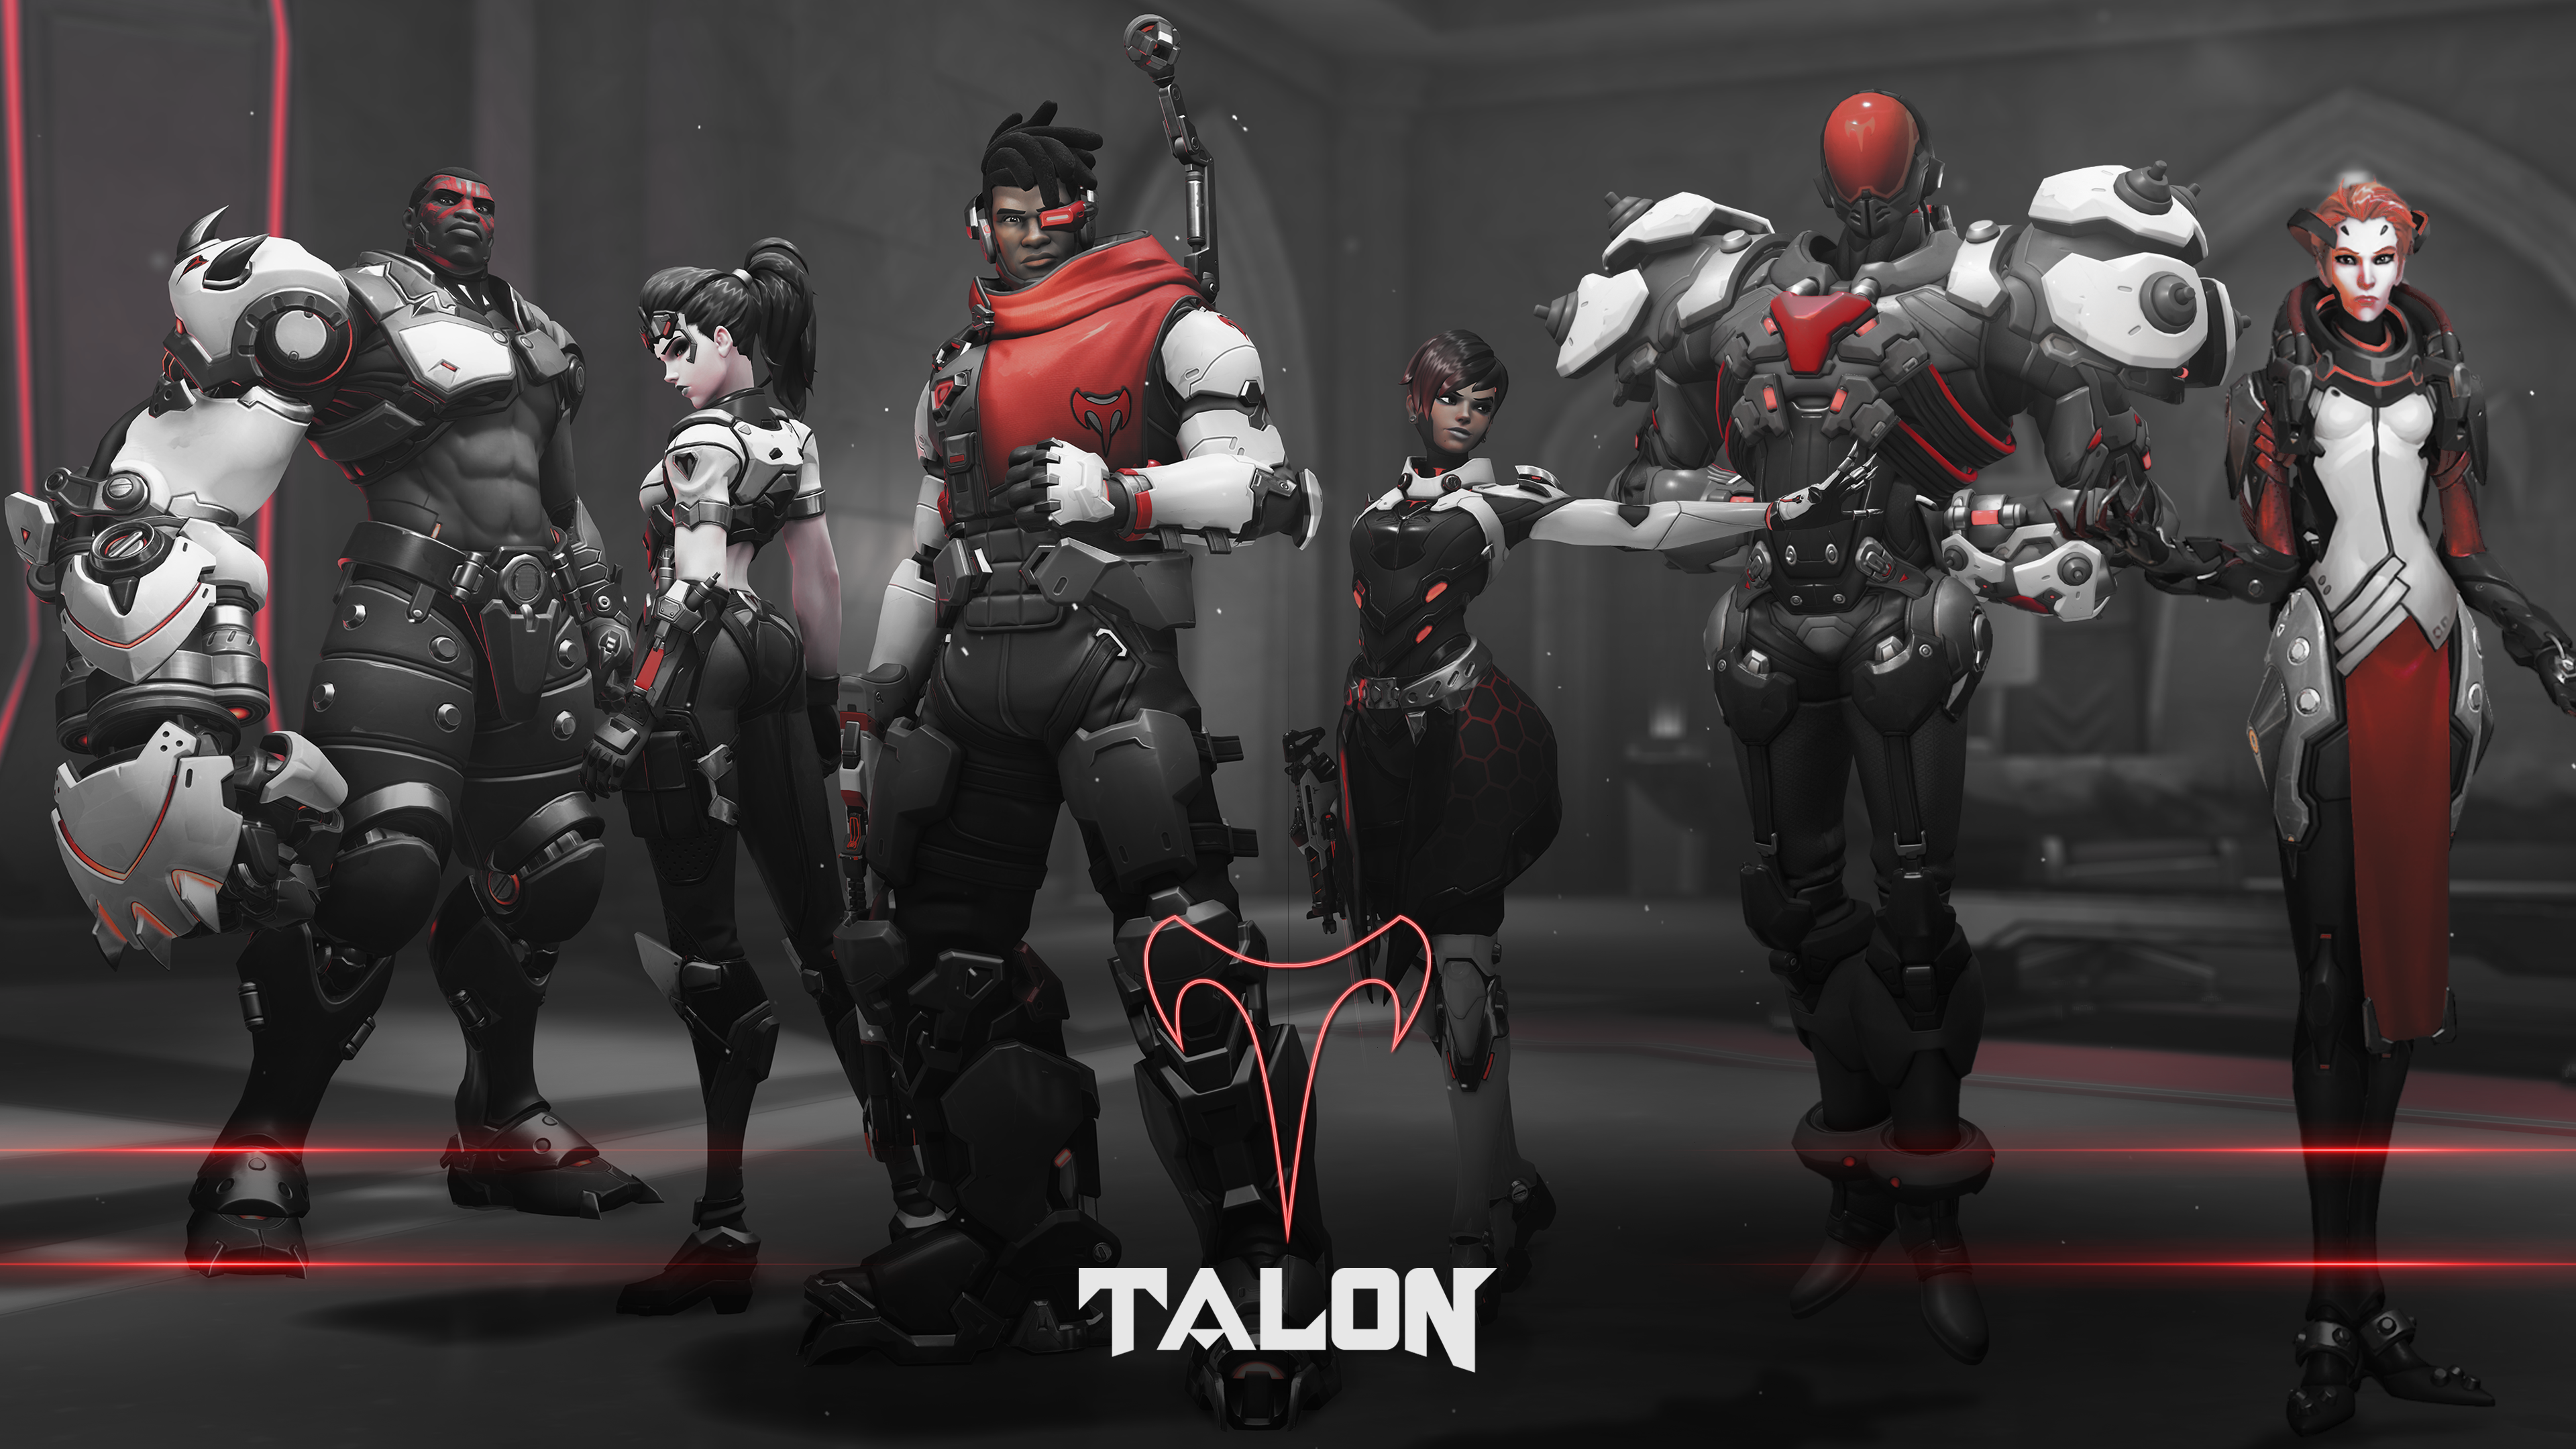 Talon Squad in Uniform. Overwatch Wallpaper [4k:9] PC